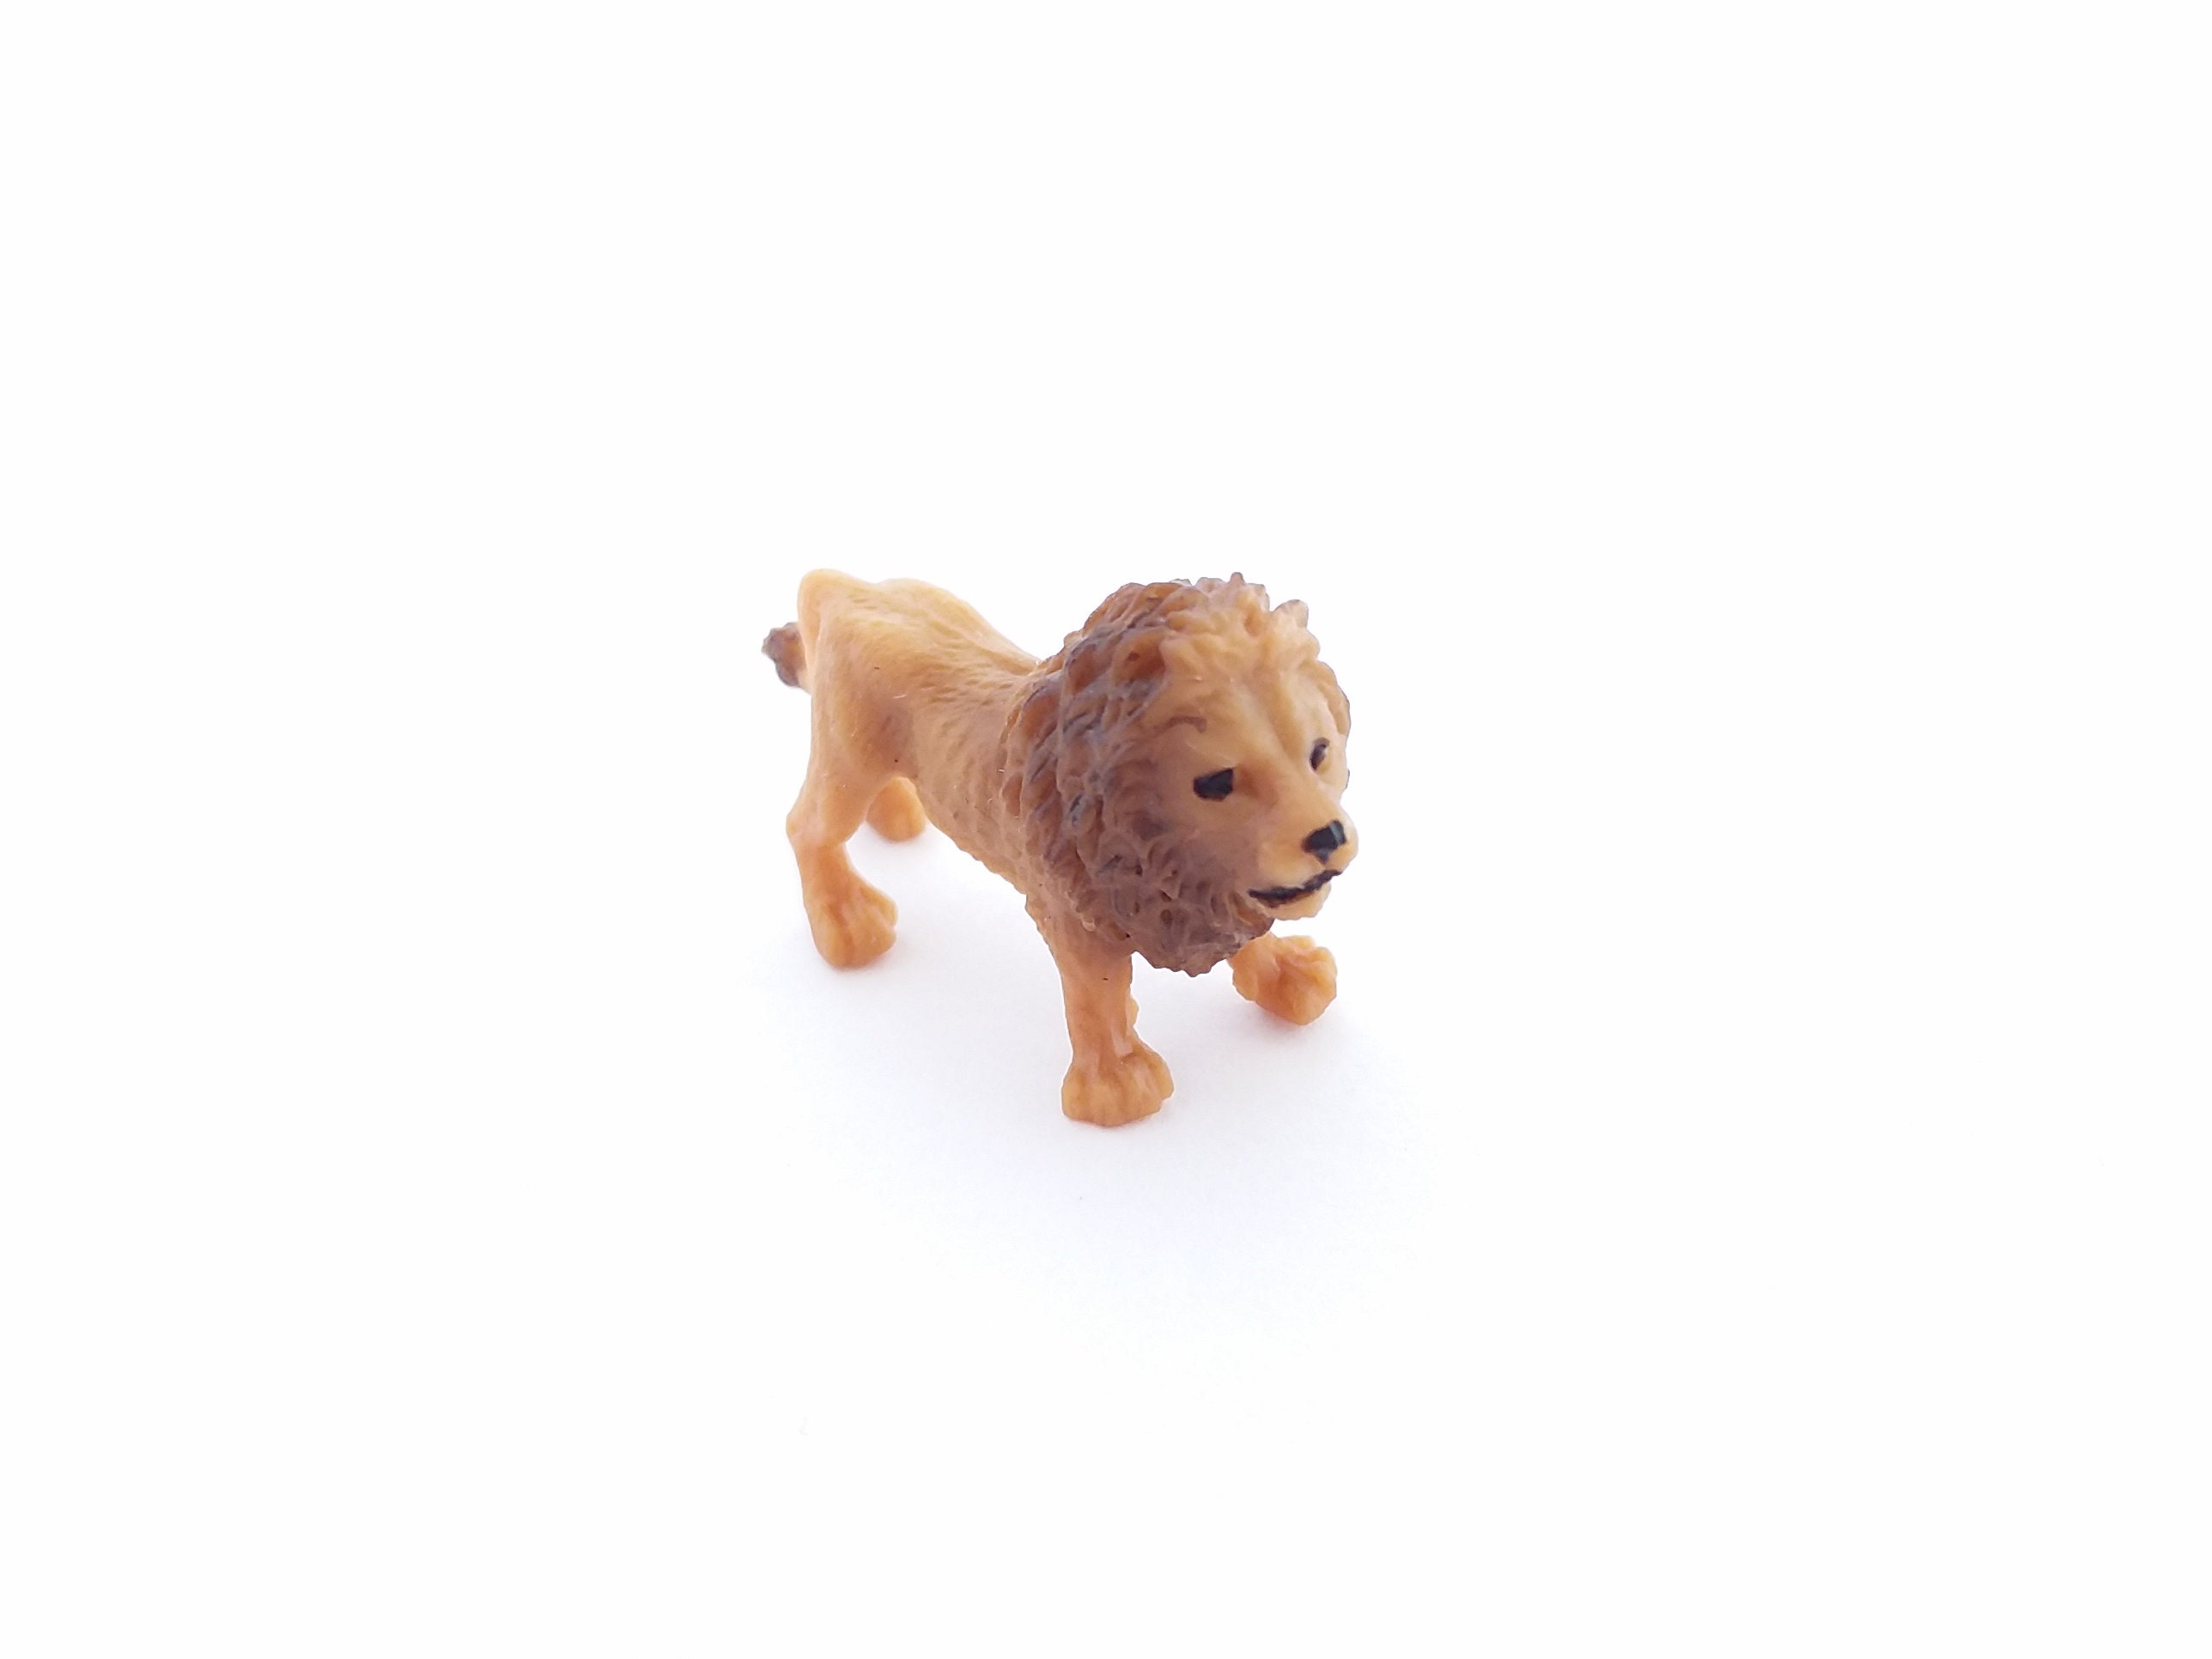 Tiny Lion Figurine Soft Plastic Animal for Fairy Garden, Diorama, or